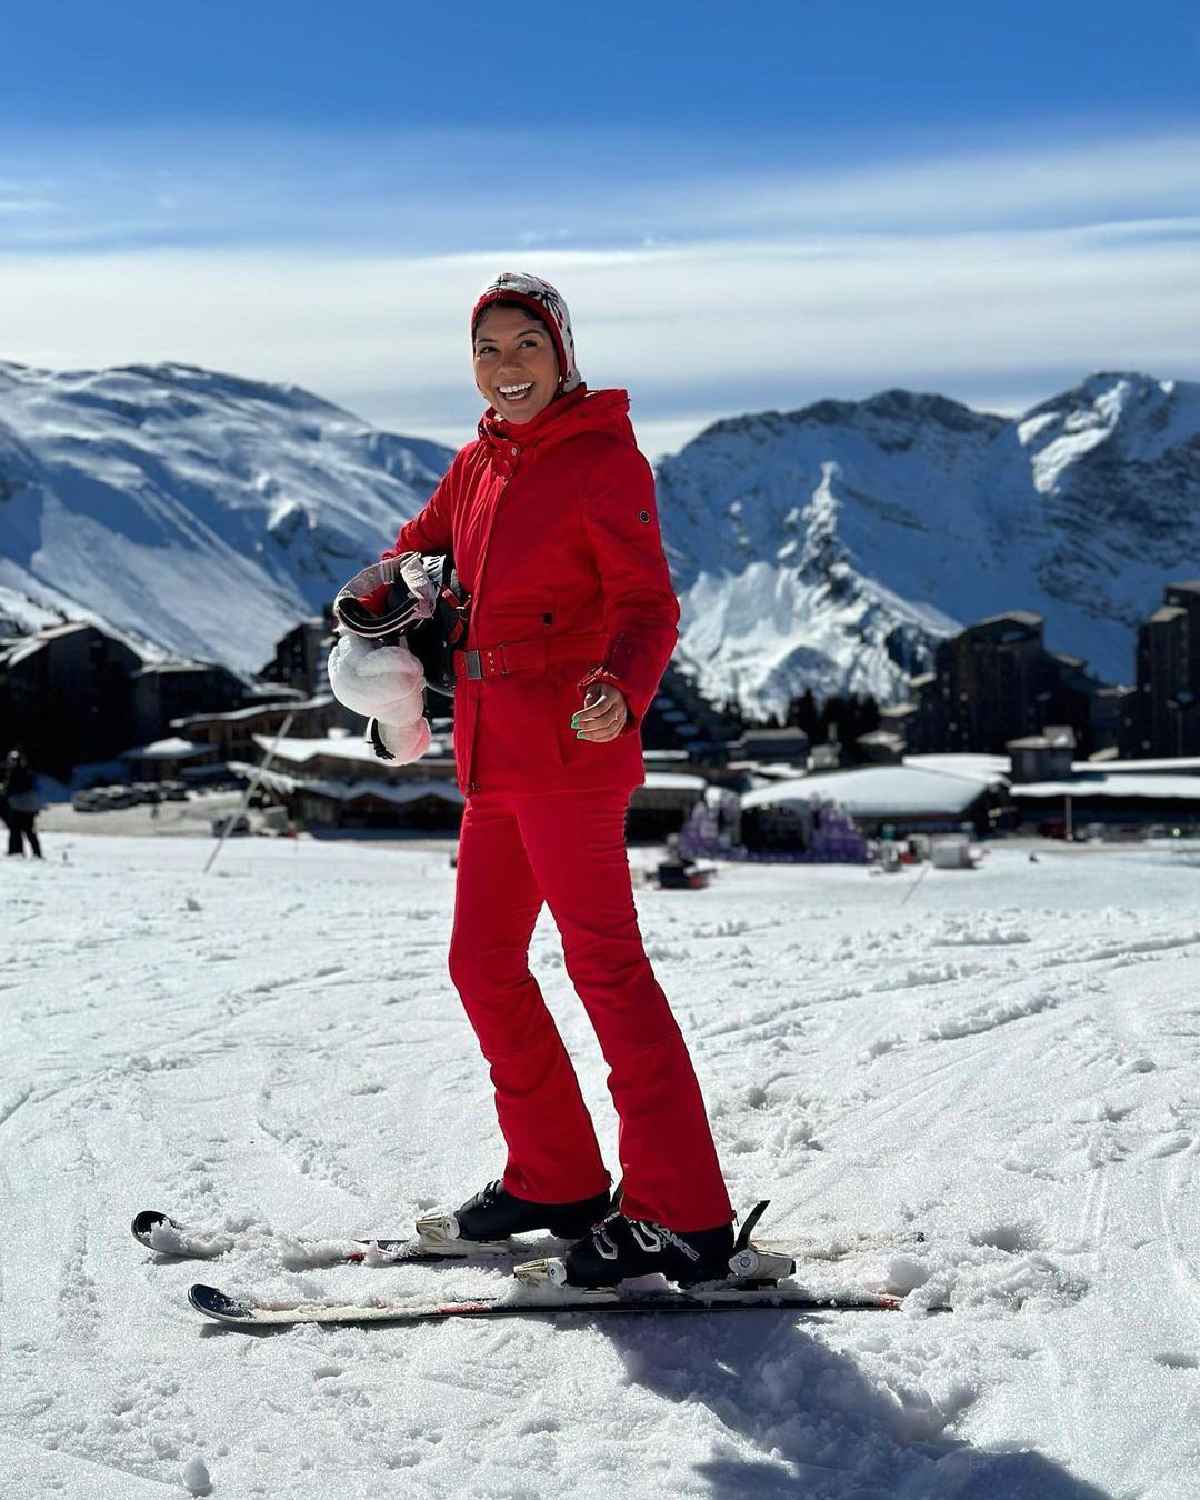 Poivre Blanc Black stretch ski jacket with faux fur